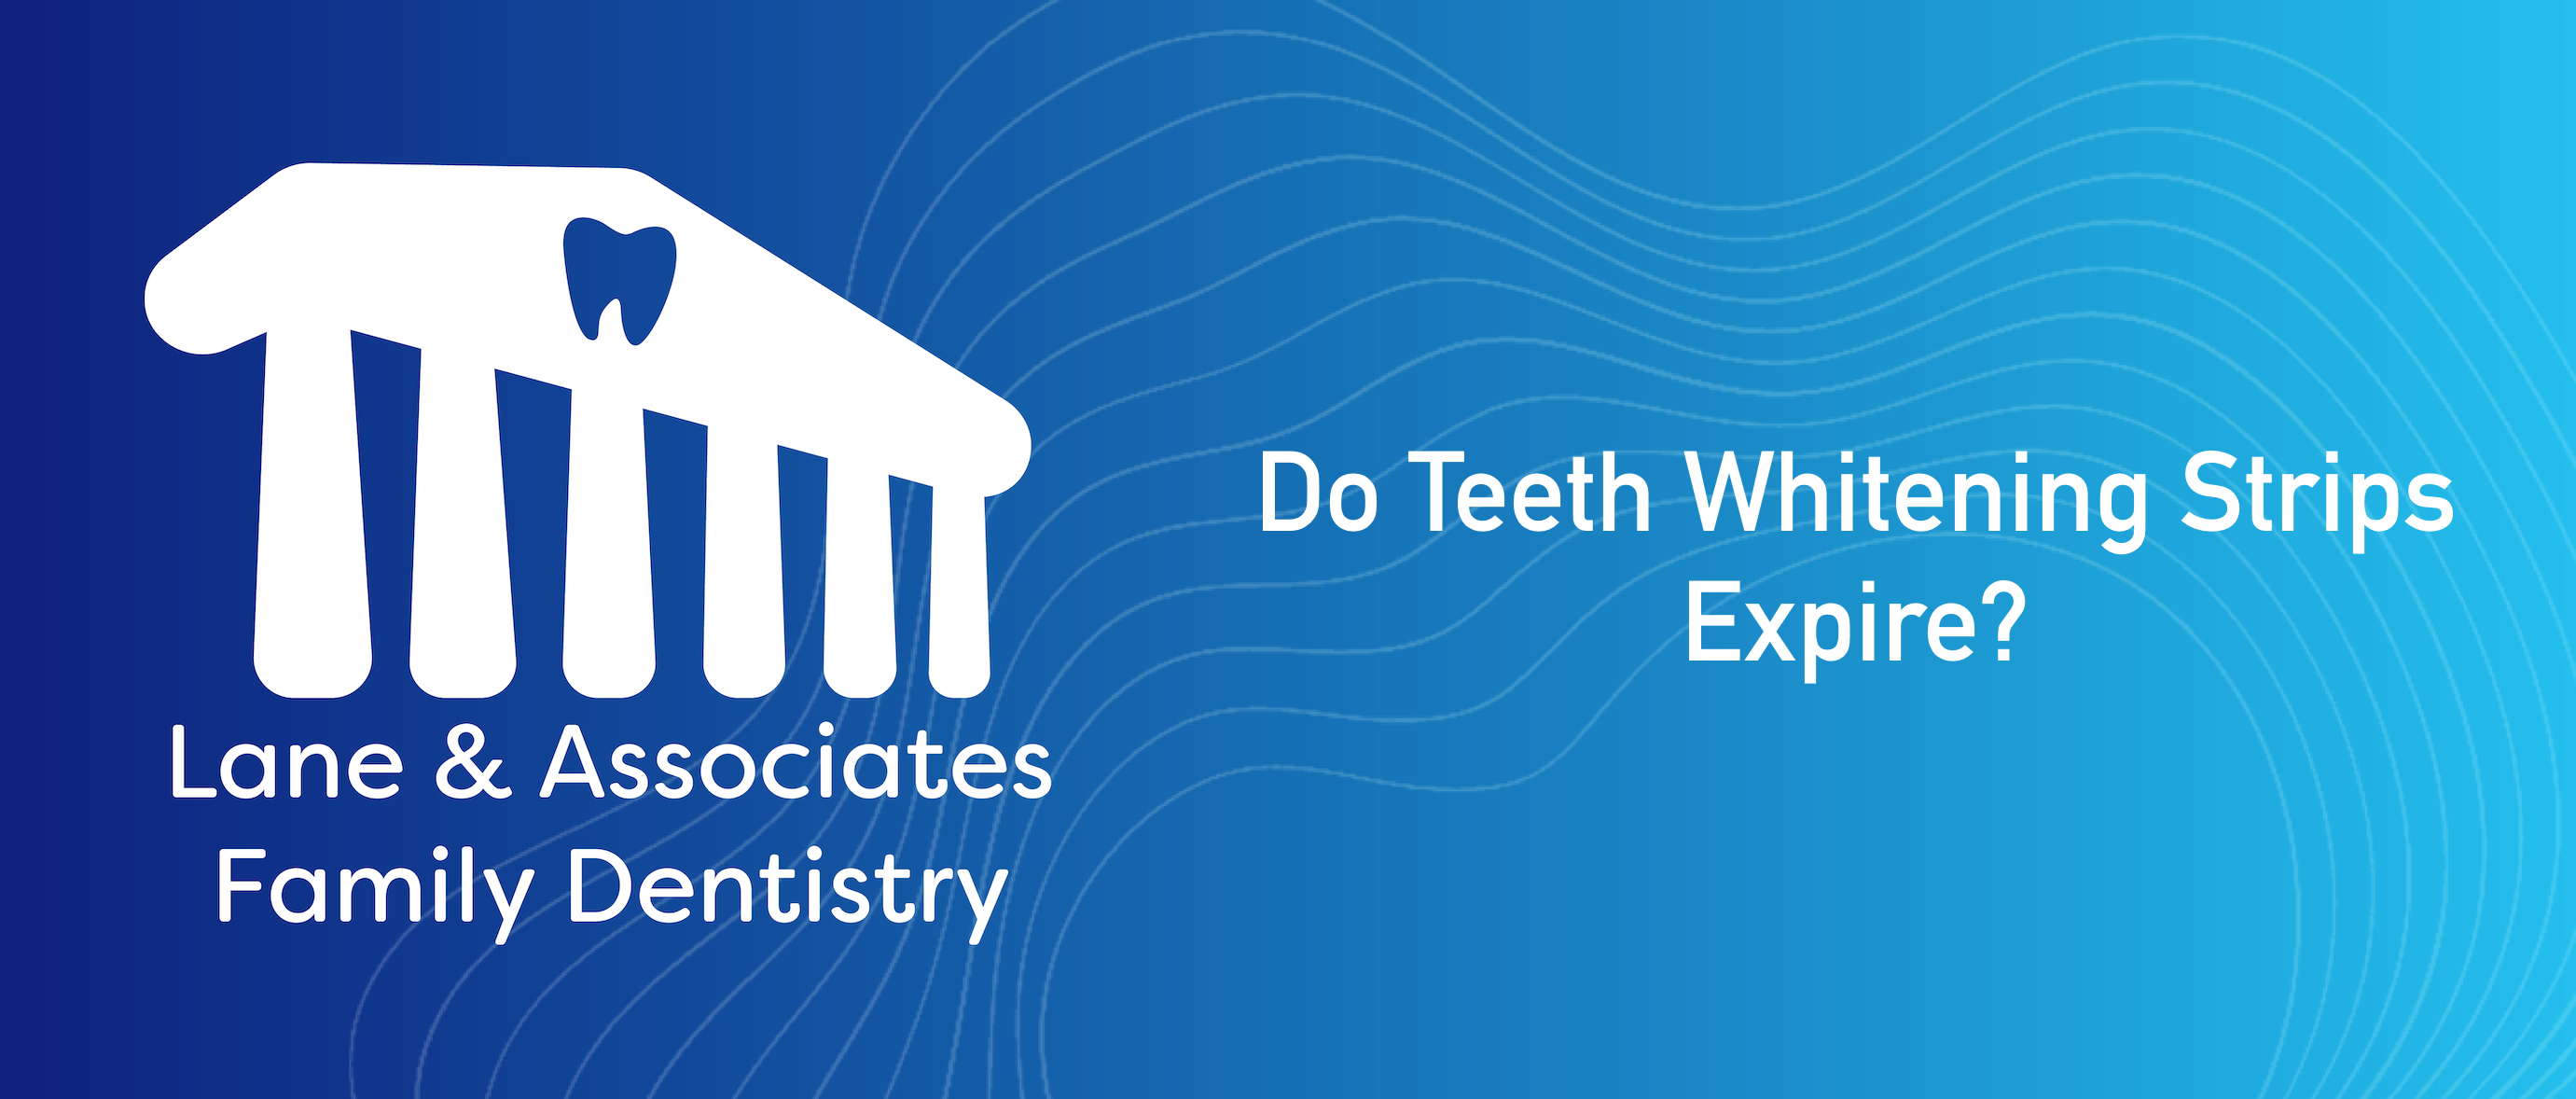 Do Teeth Whitening Strips Expire?